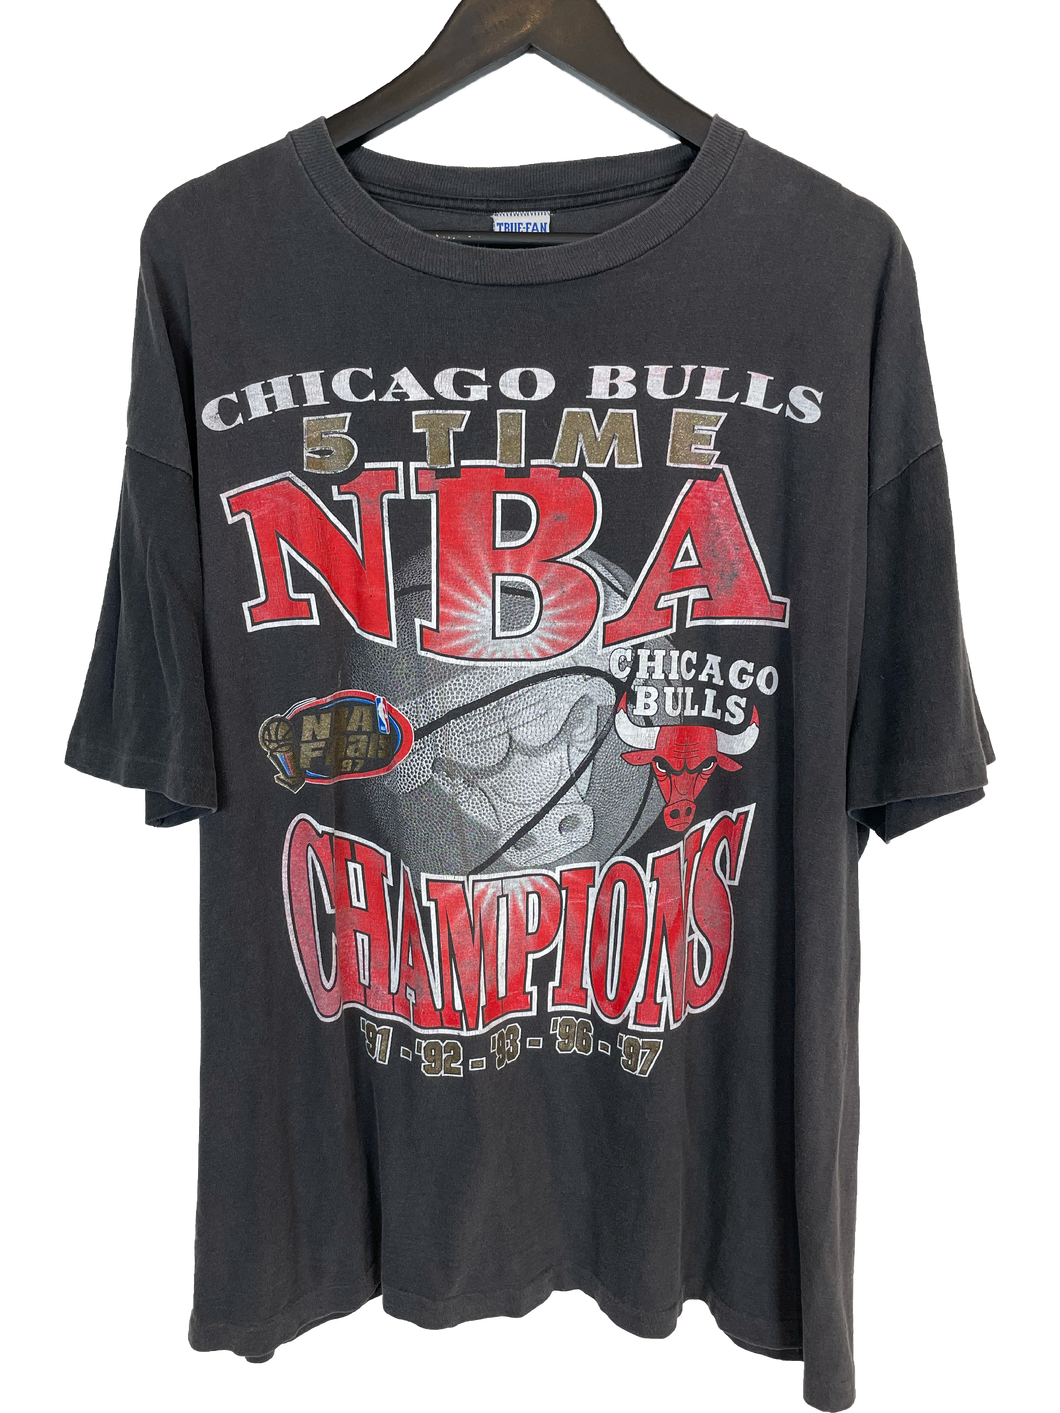 1997 CHICAGO BULLS NBA CHAMPS 'SS' TEE - XL